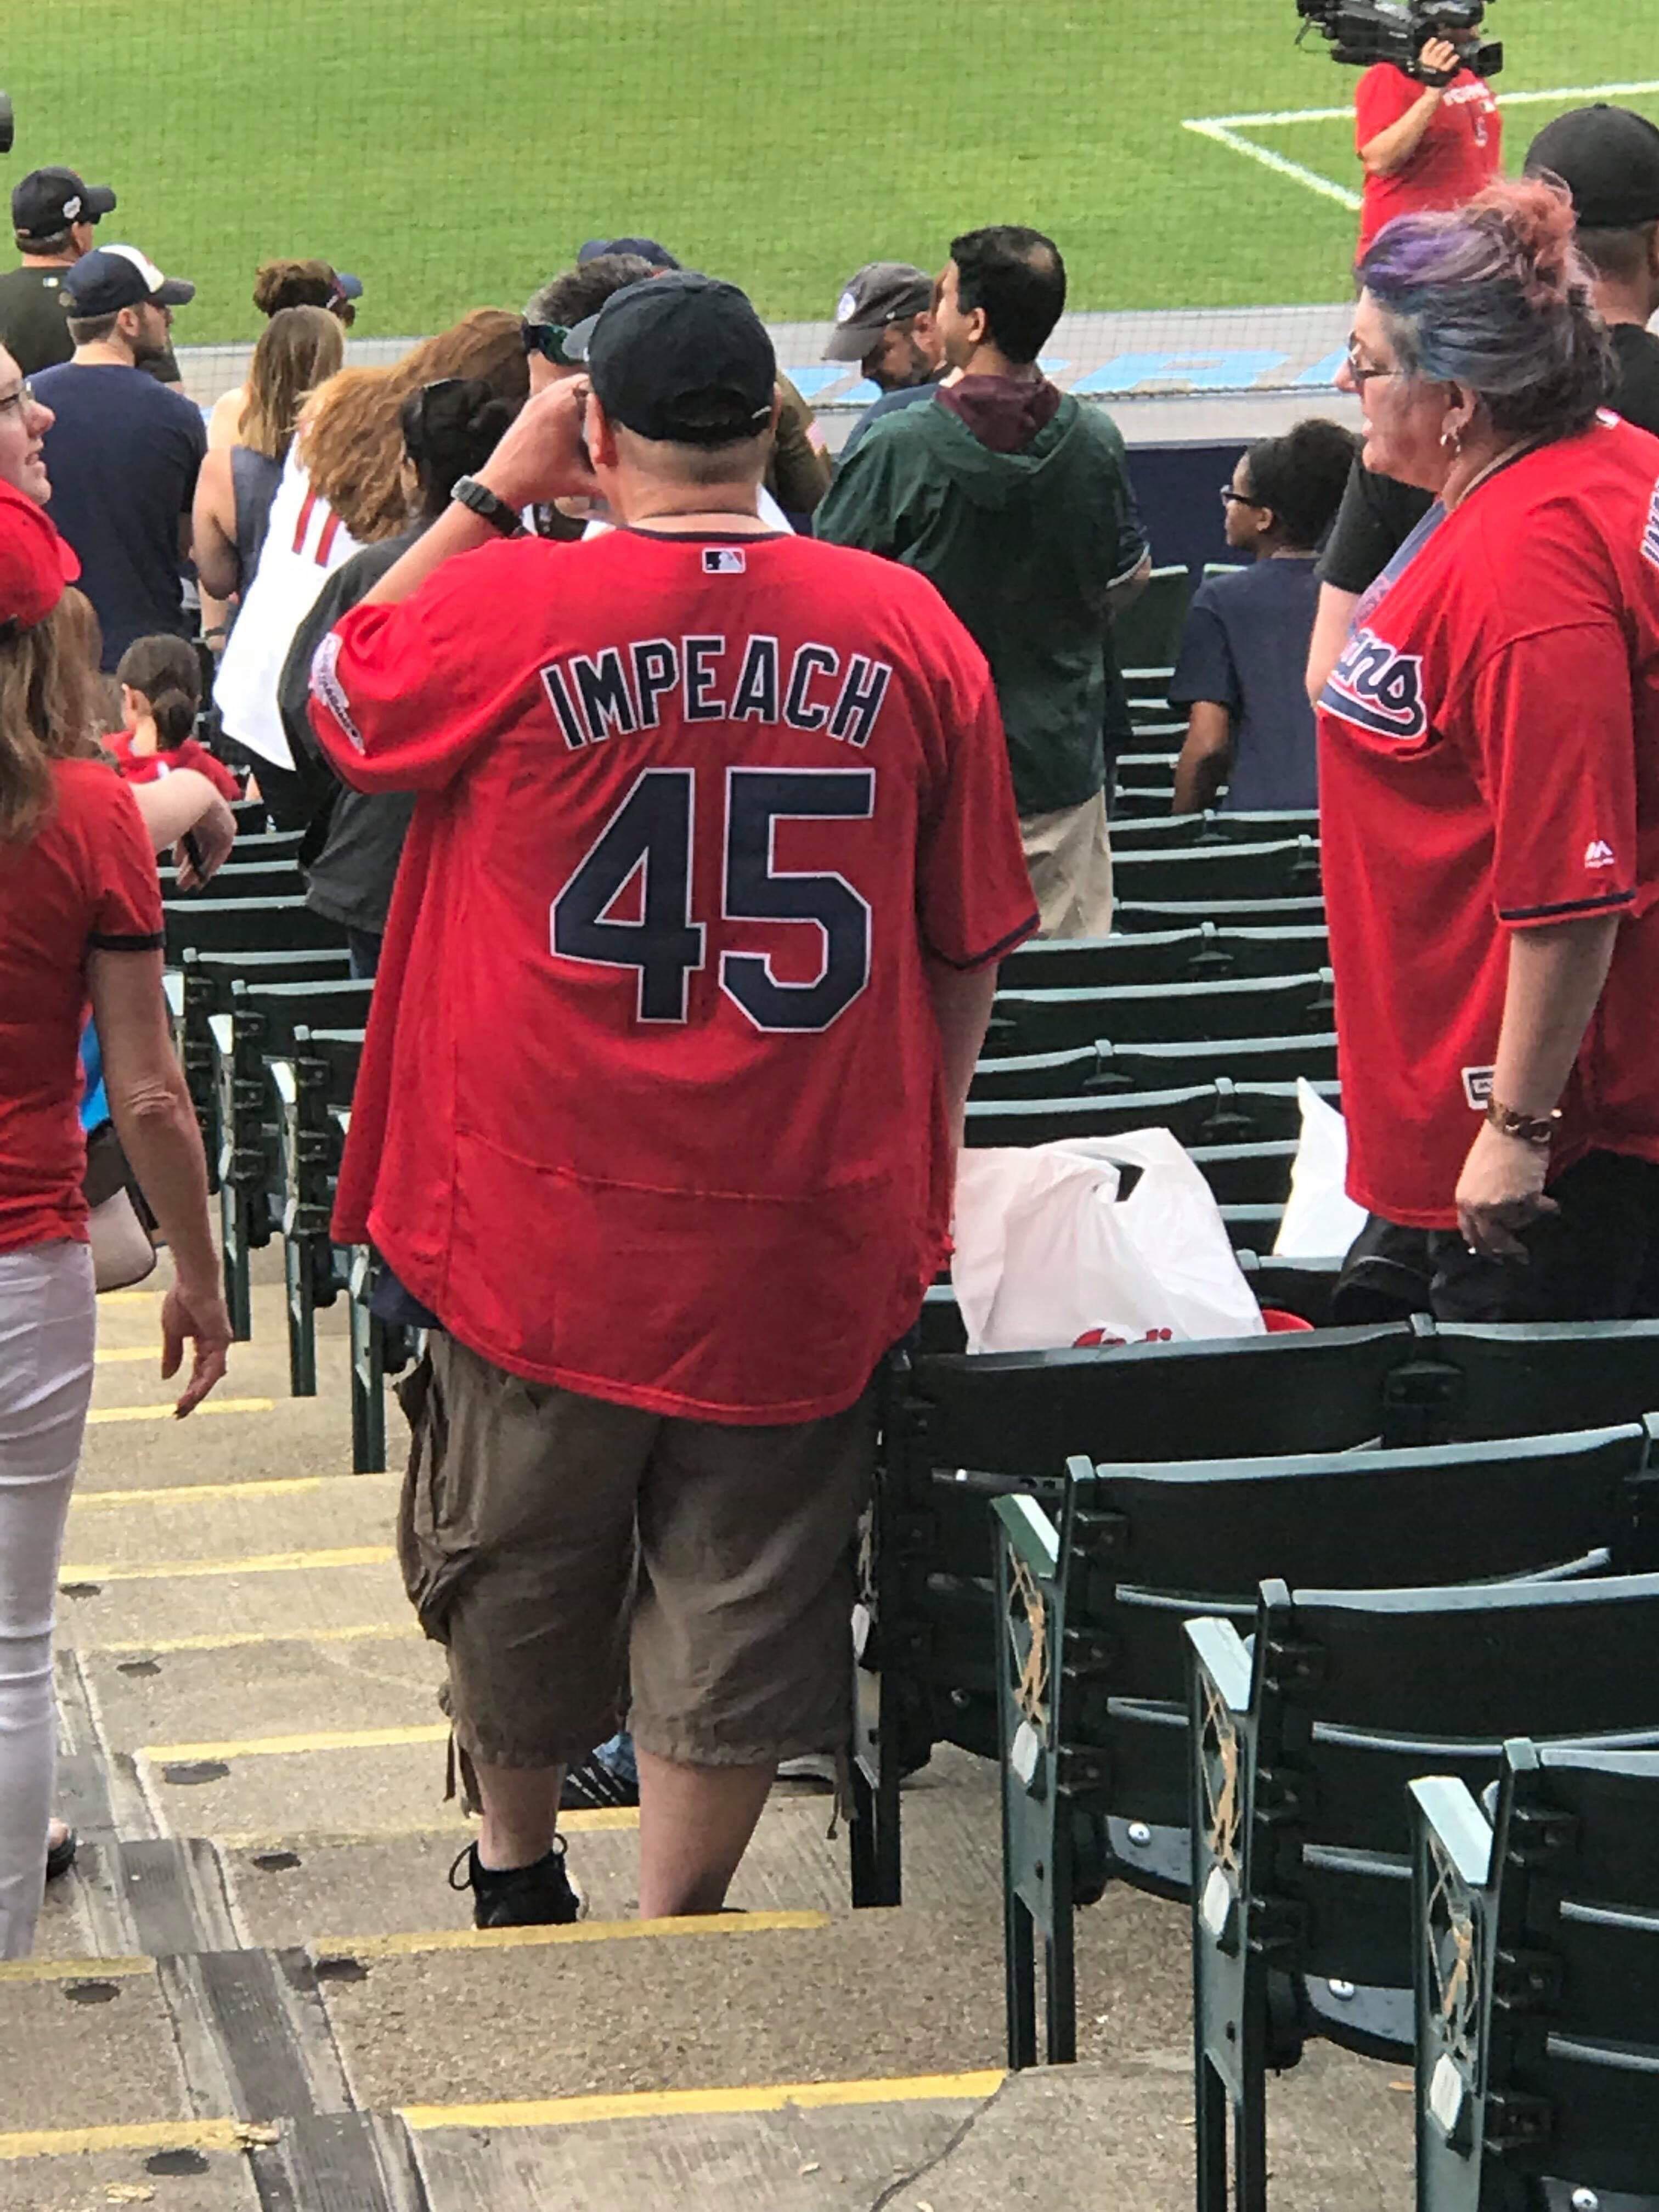 Baseball fan wearng a shirt that says Impeach 45